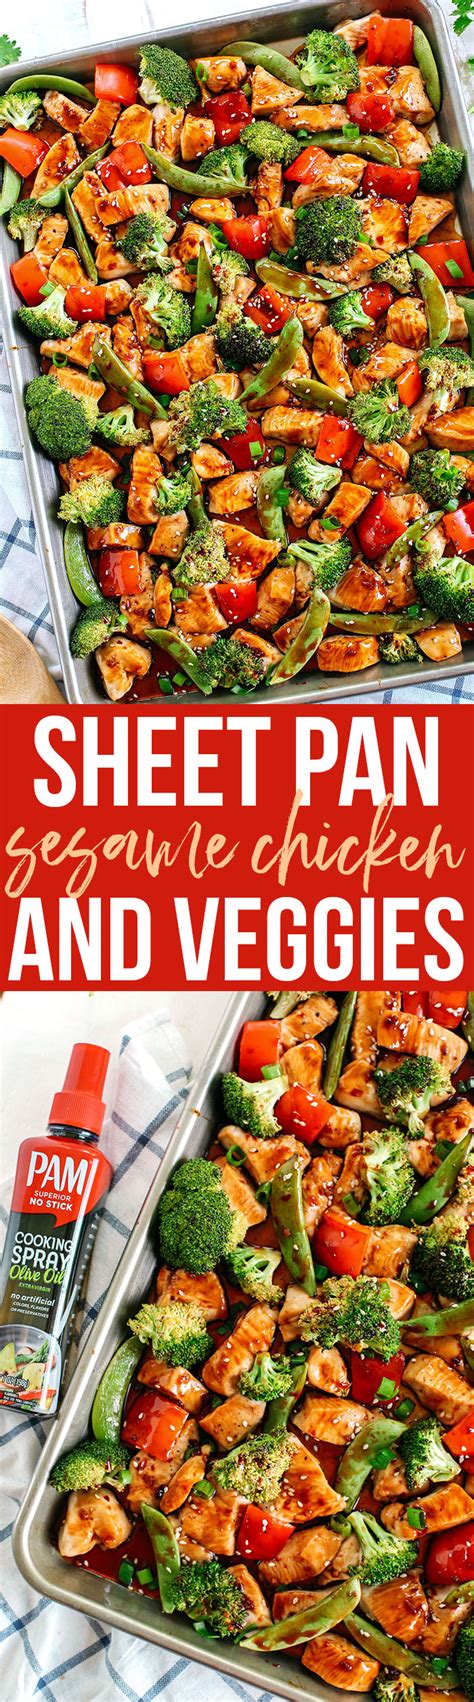 Sheet Pan Sesame Chicken And Veggies Eat Yourself Skinny